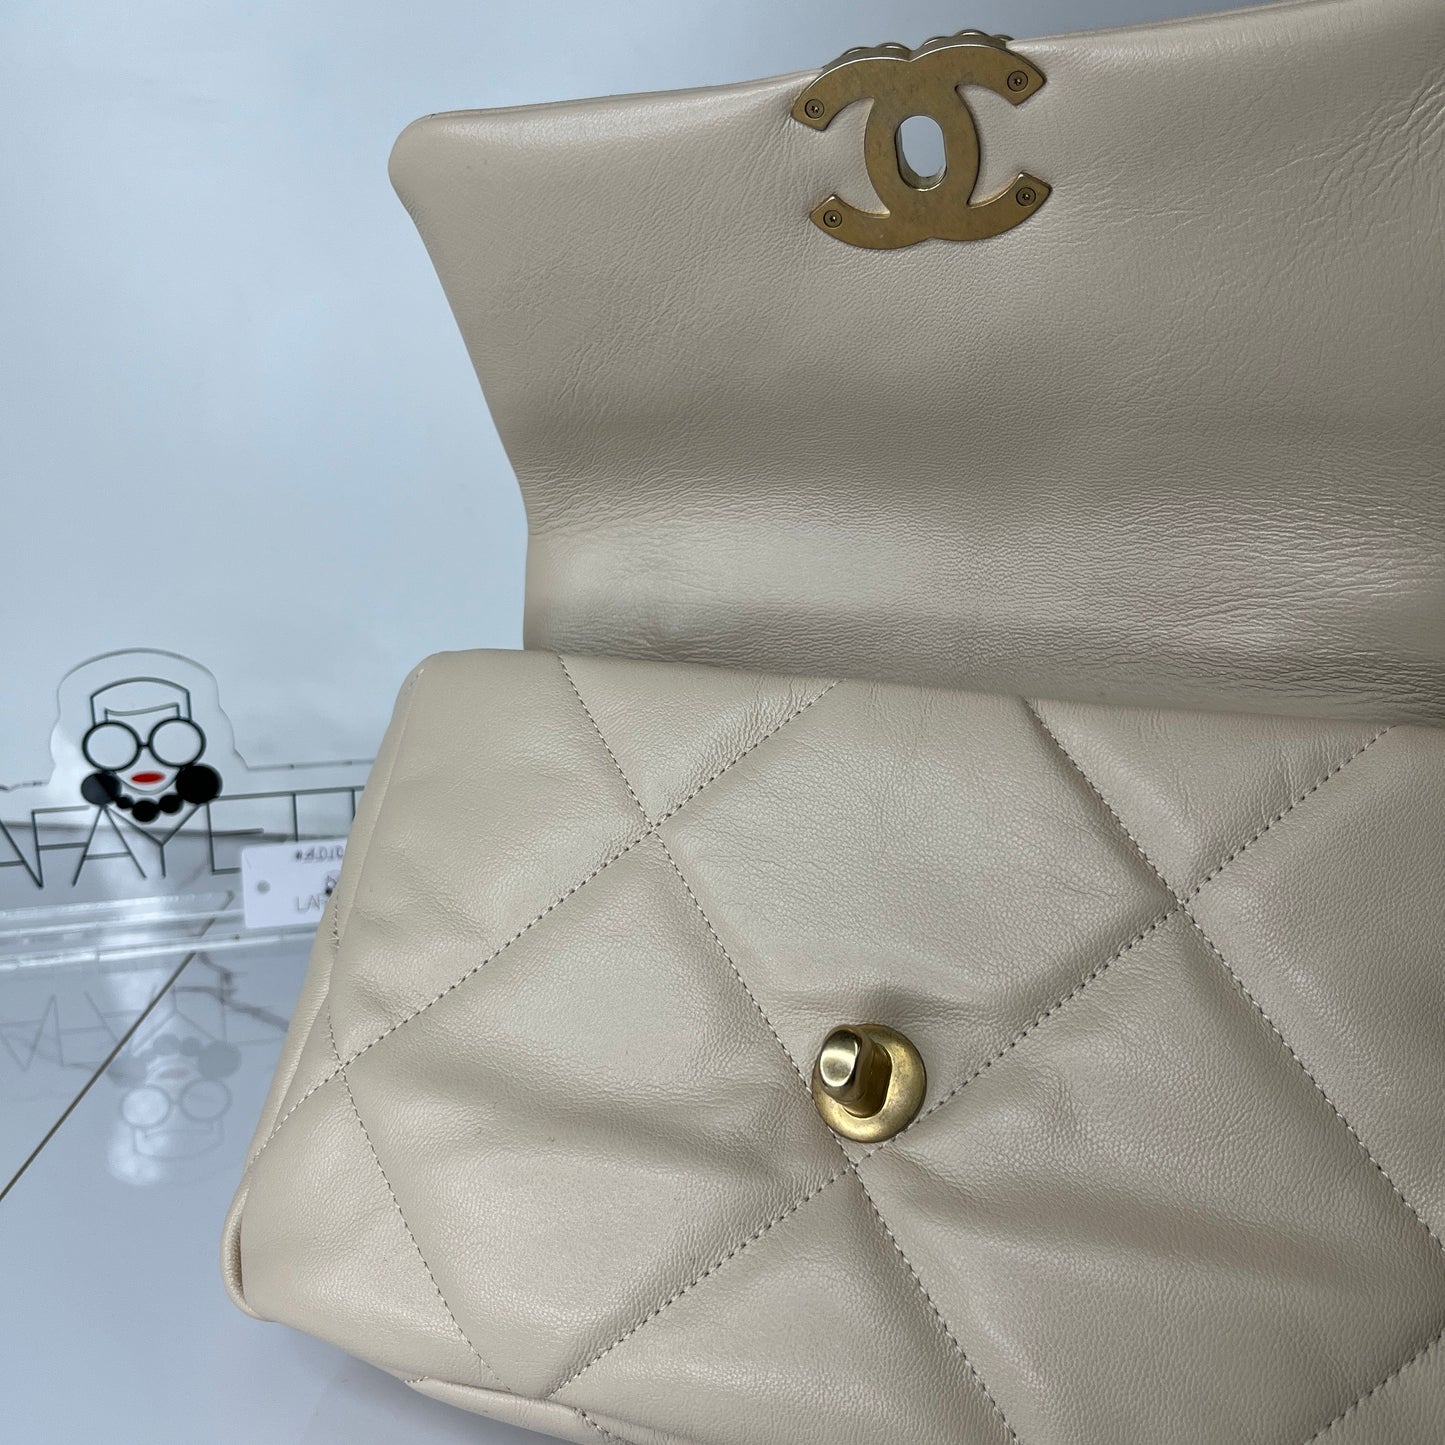 Chanel 19 Handbag - Lafayette Consignment